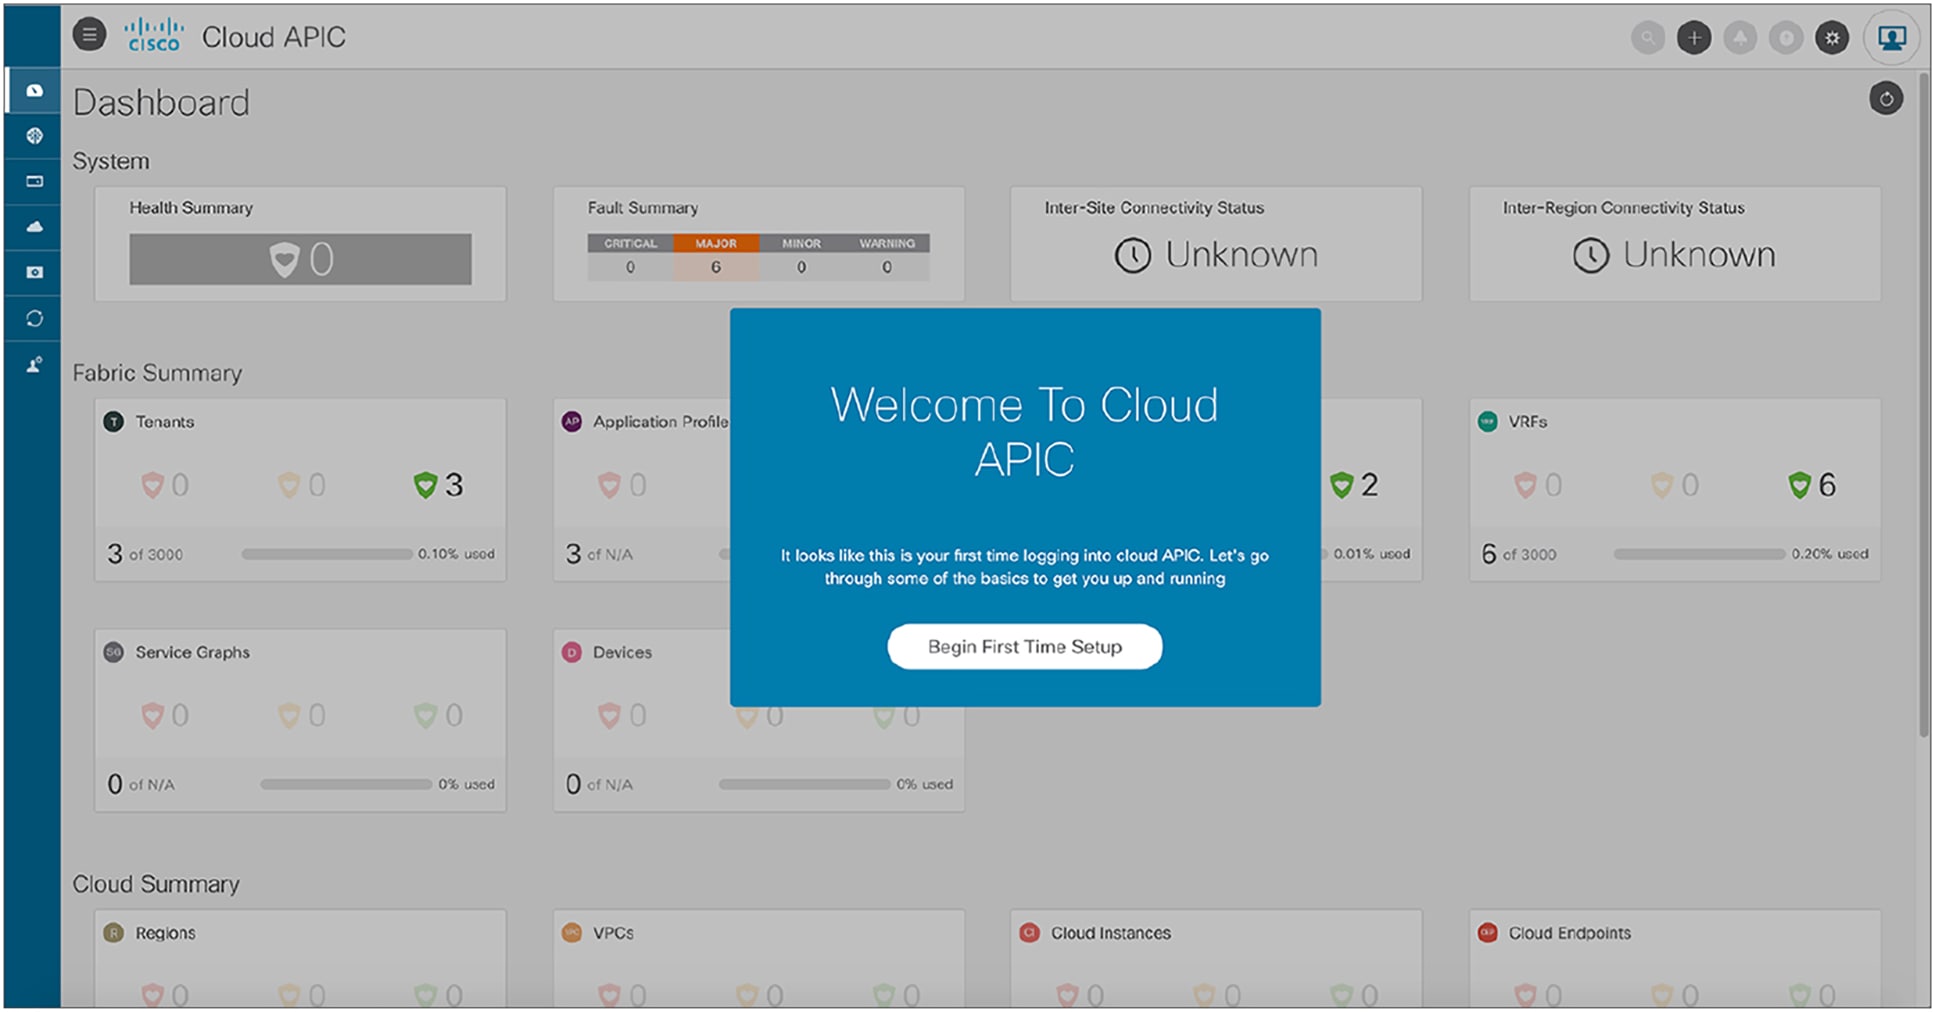 First time setup wizard of Cisco Cloud APIC